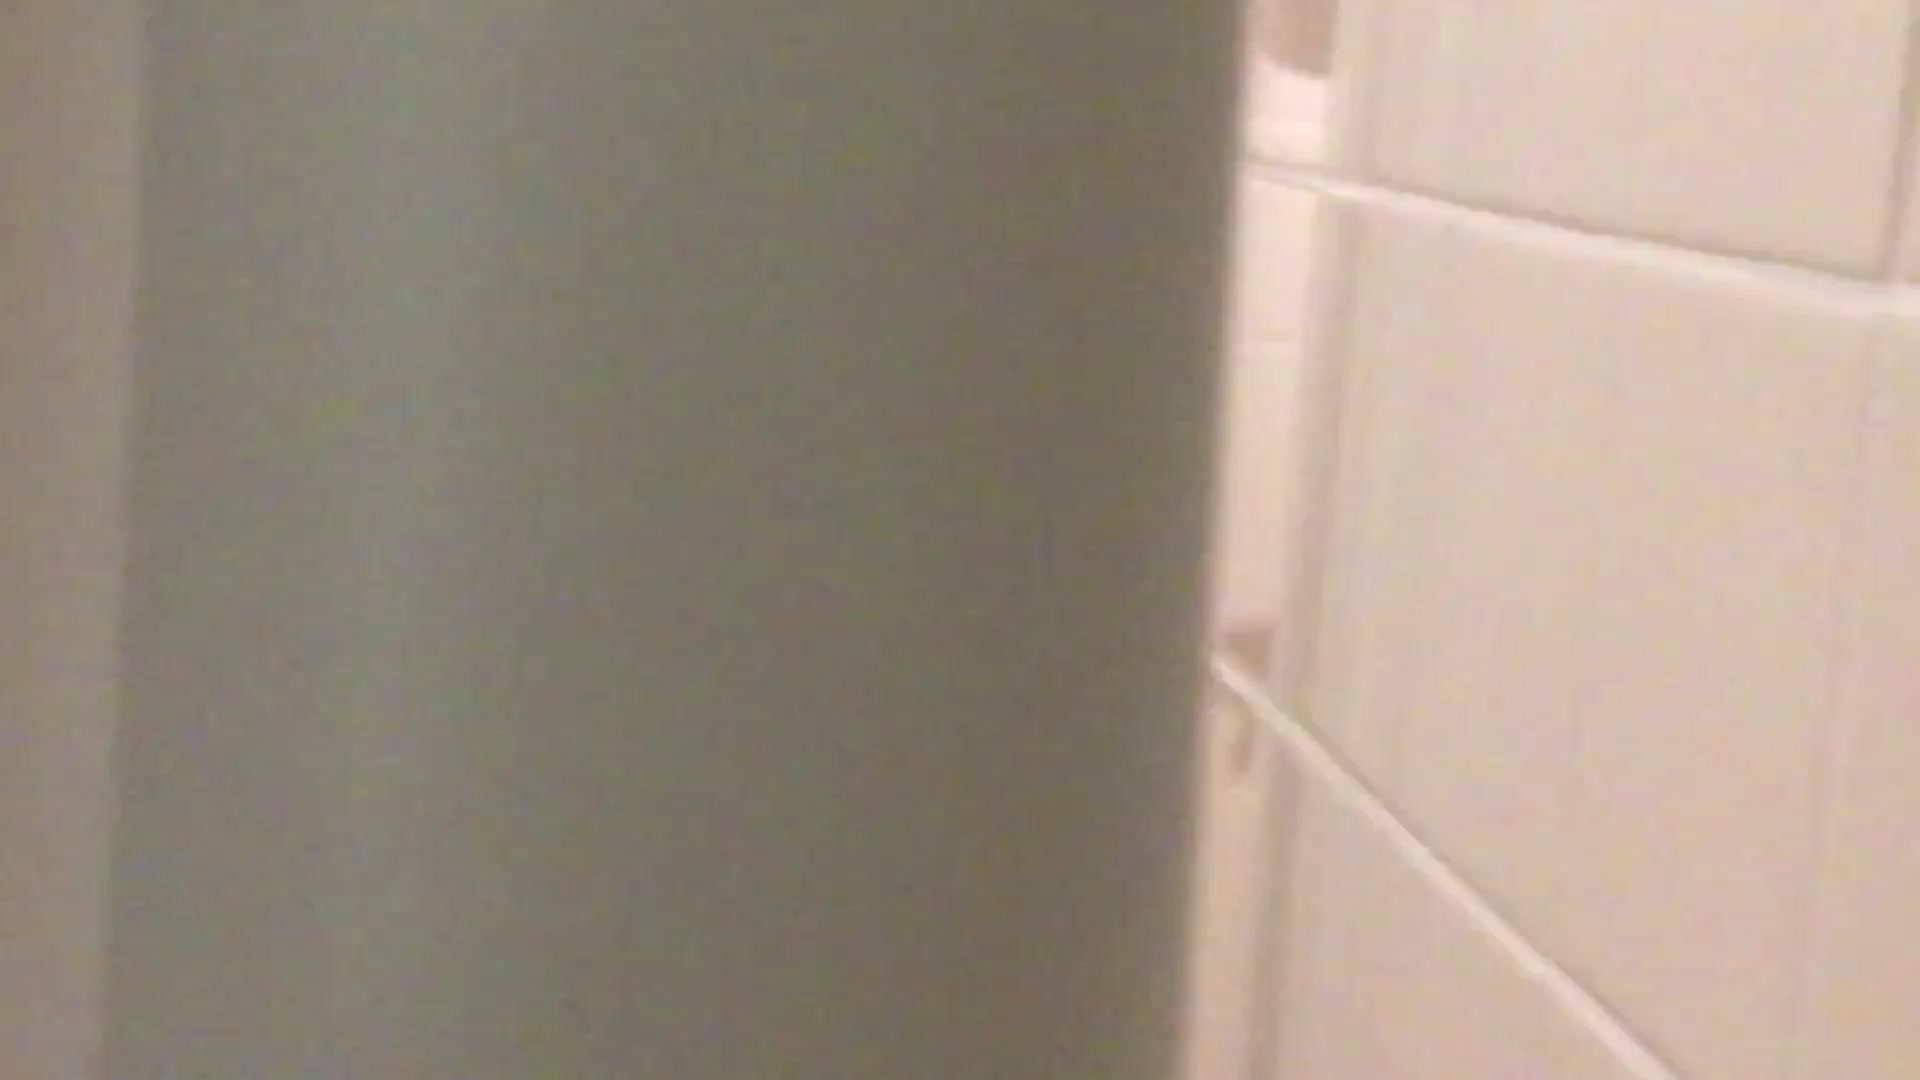 Uncircumcised College guy caught jerking off in dorm shower